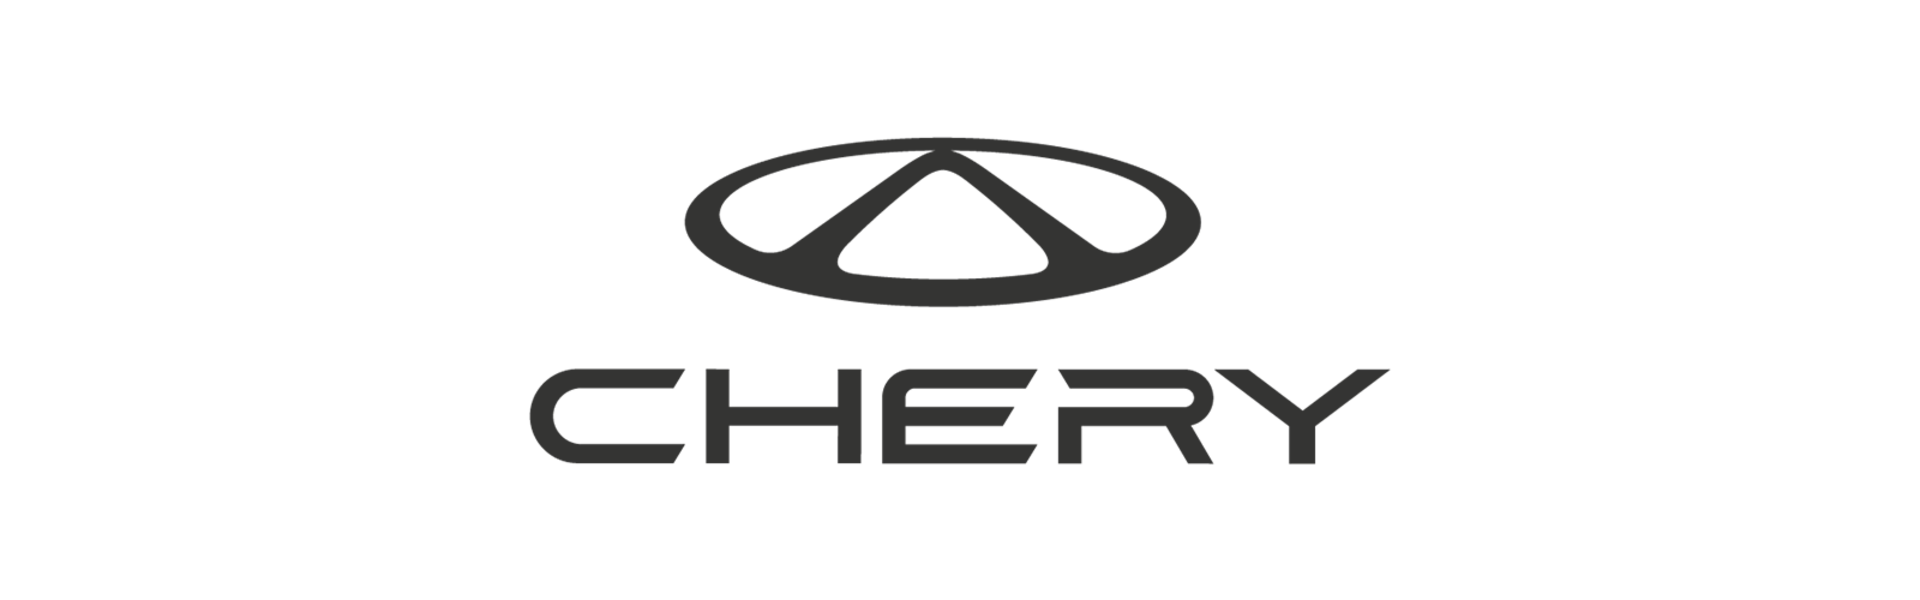 Значки чери тигго 4. Chery логотип. Чери Тигго лого. Cherry автомобиль логотип. Китайские автомобили Chery.